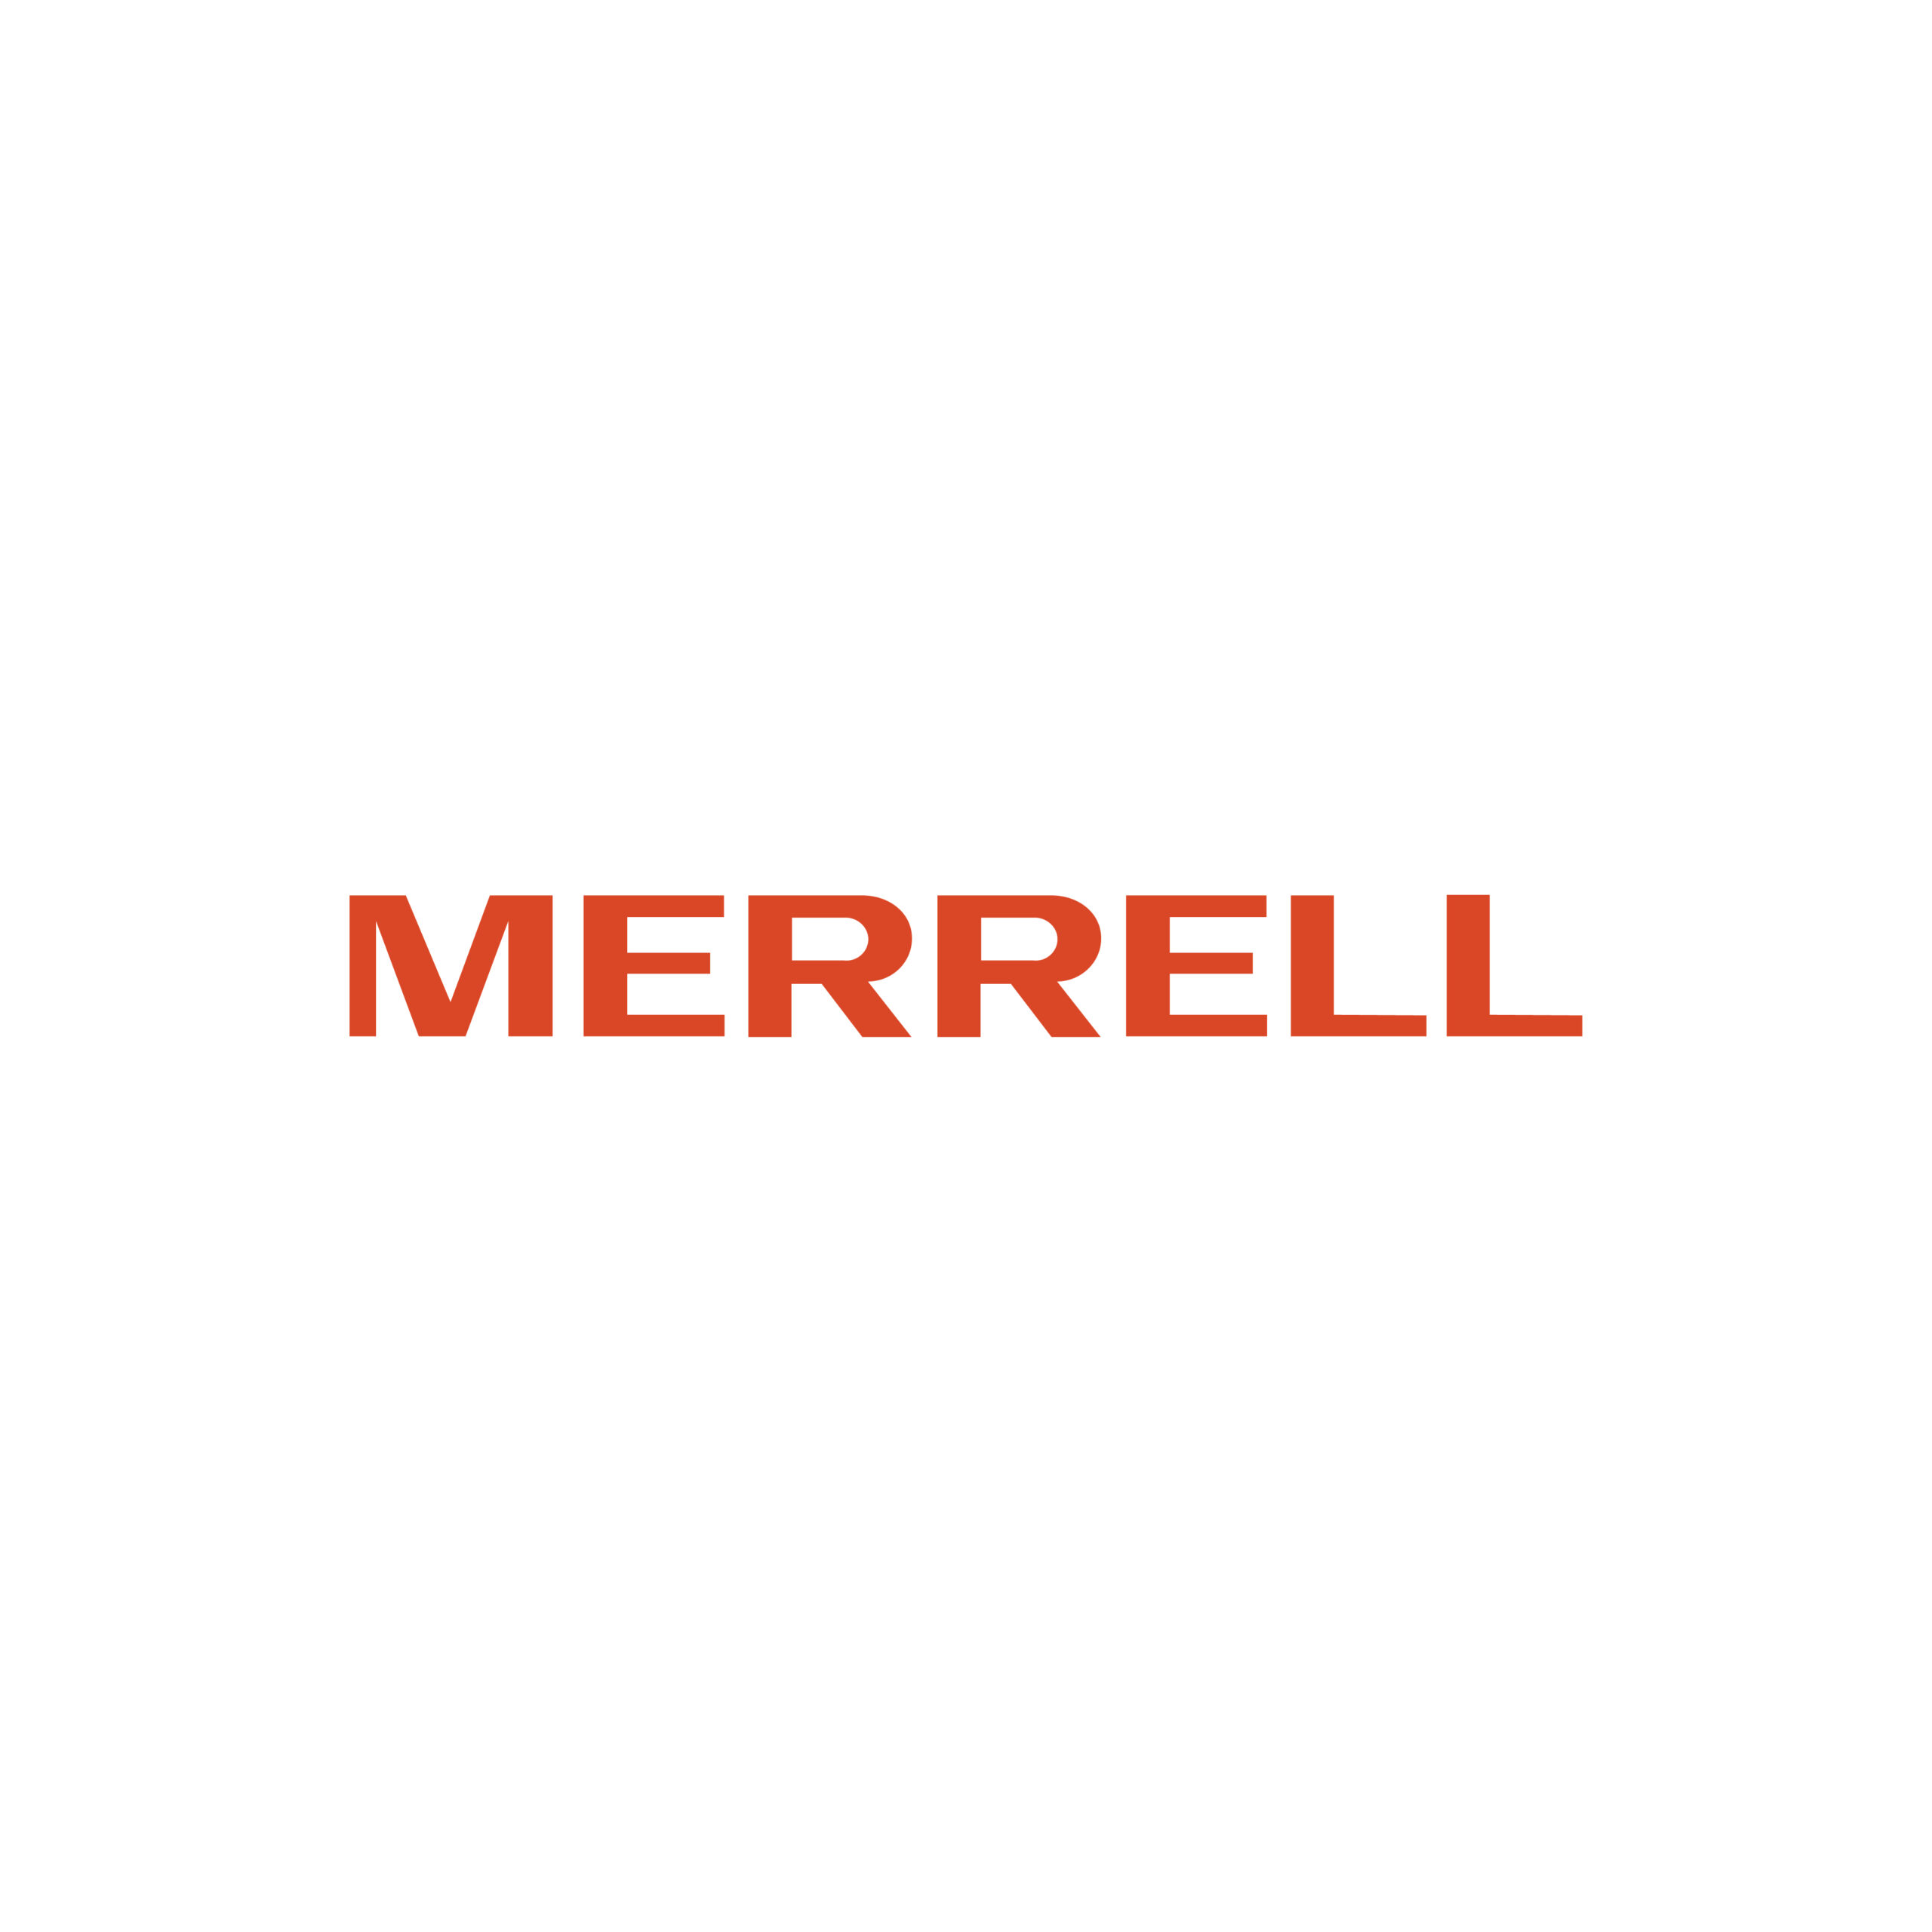 Merrell Logo Vector